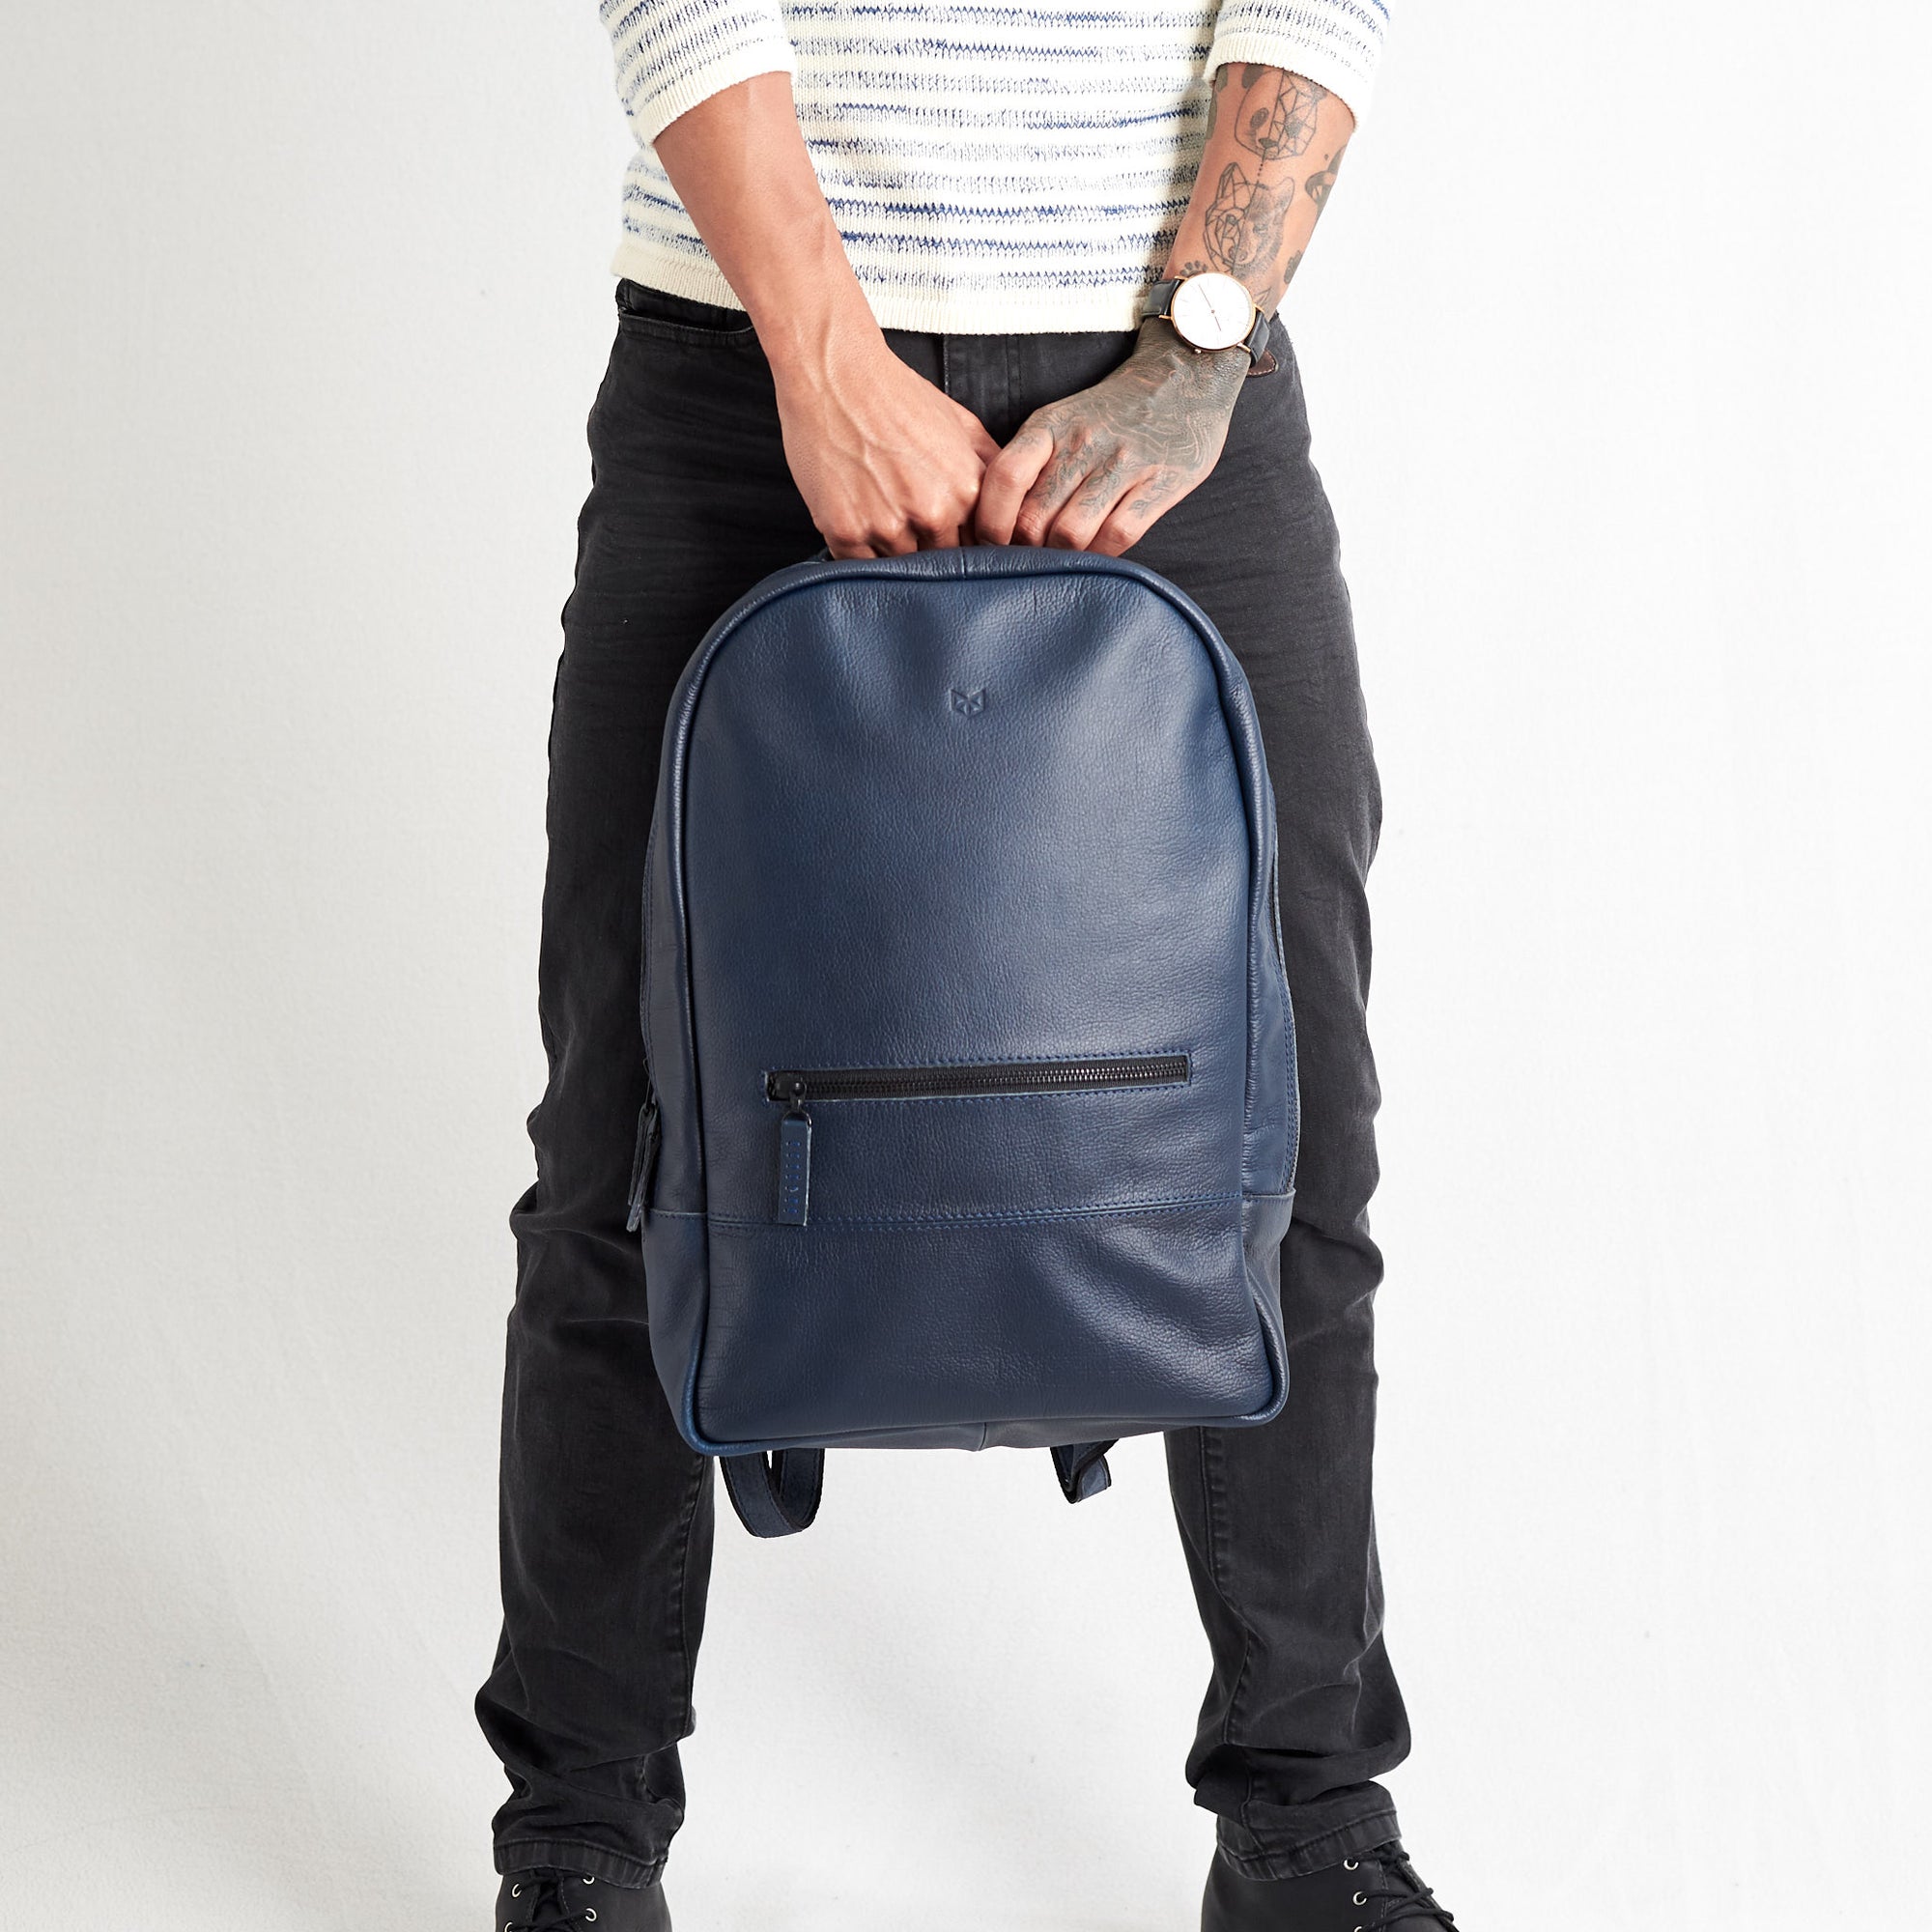 stylish laptop backpacks navy by capra leather